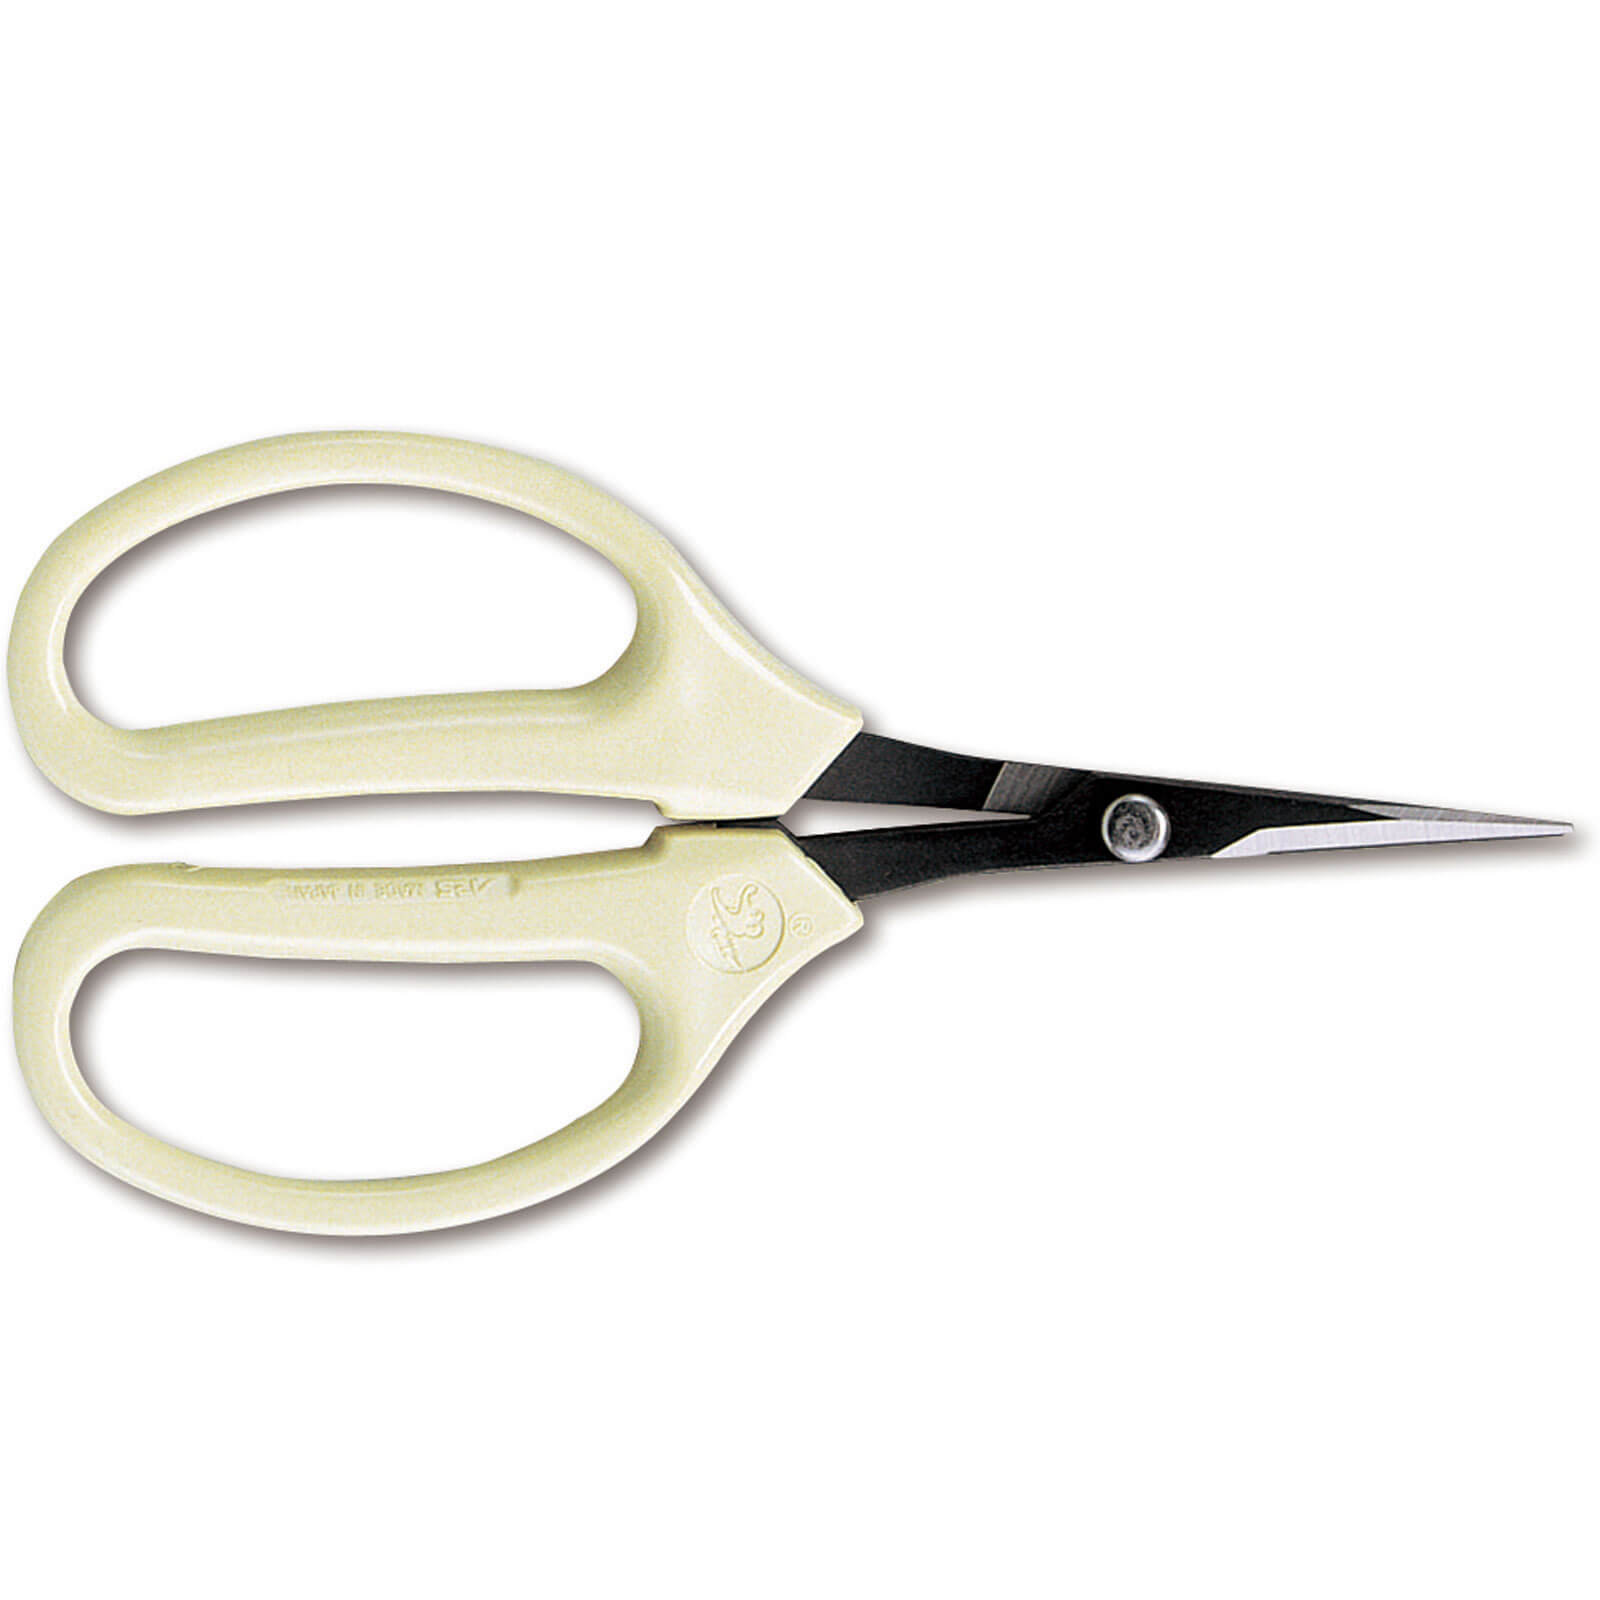 Image of ARS 320 Angled Fruit Pruner Scissors